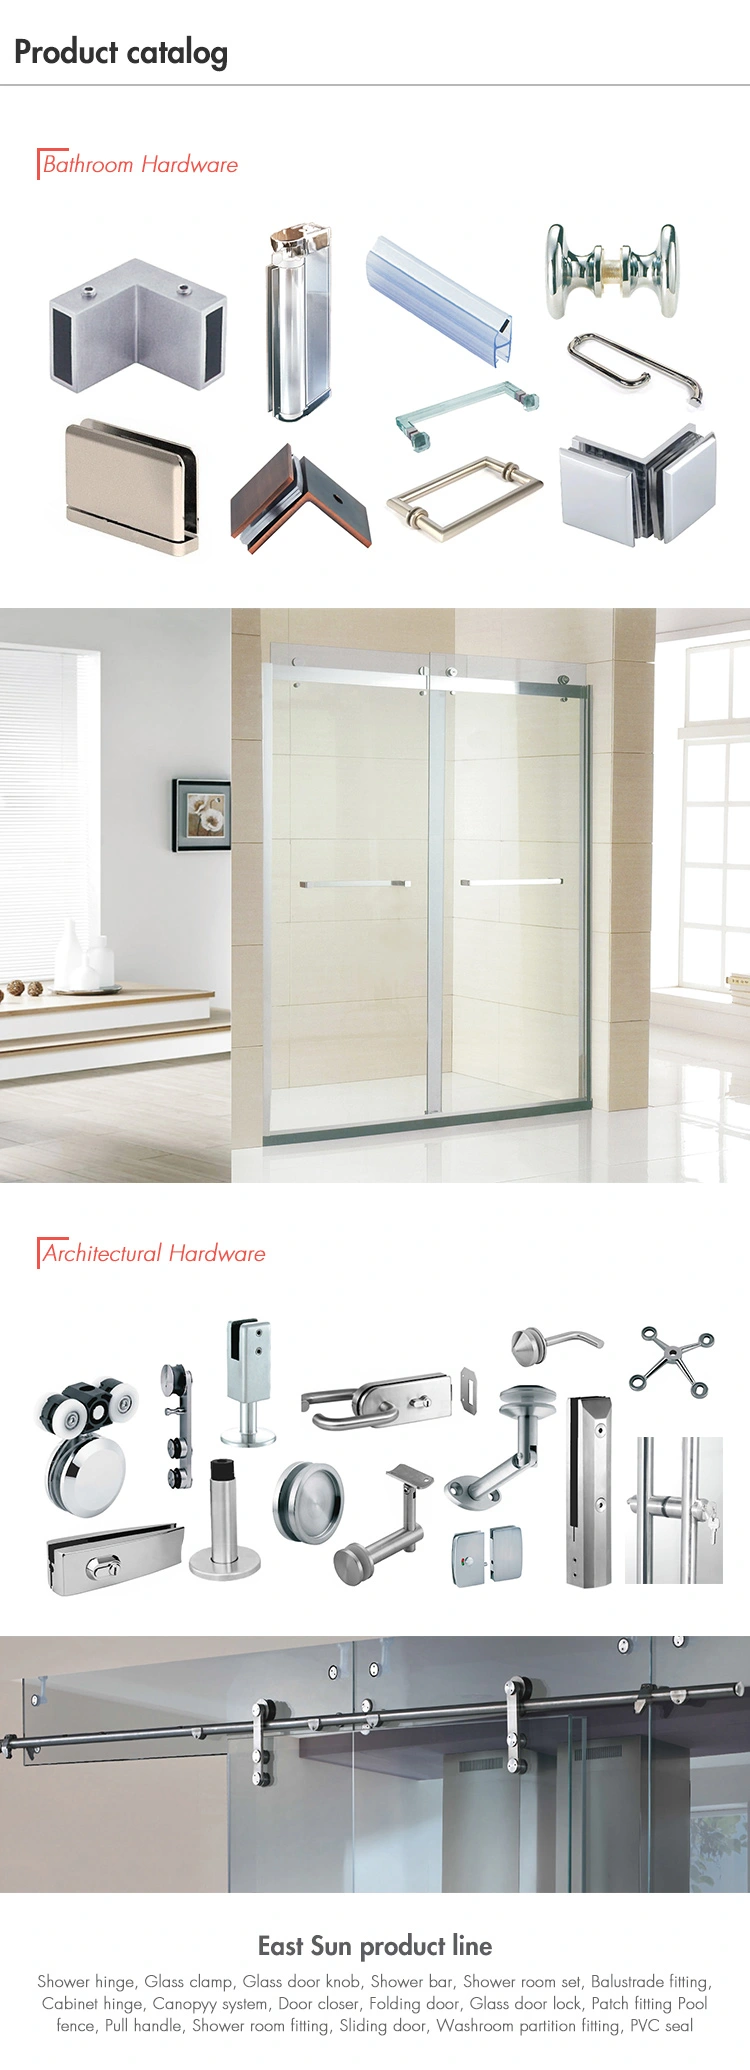 Hot Designs Bathroom Shower Room Bar (SFB-08)